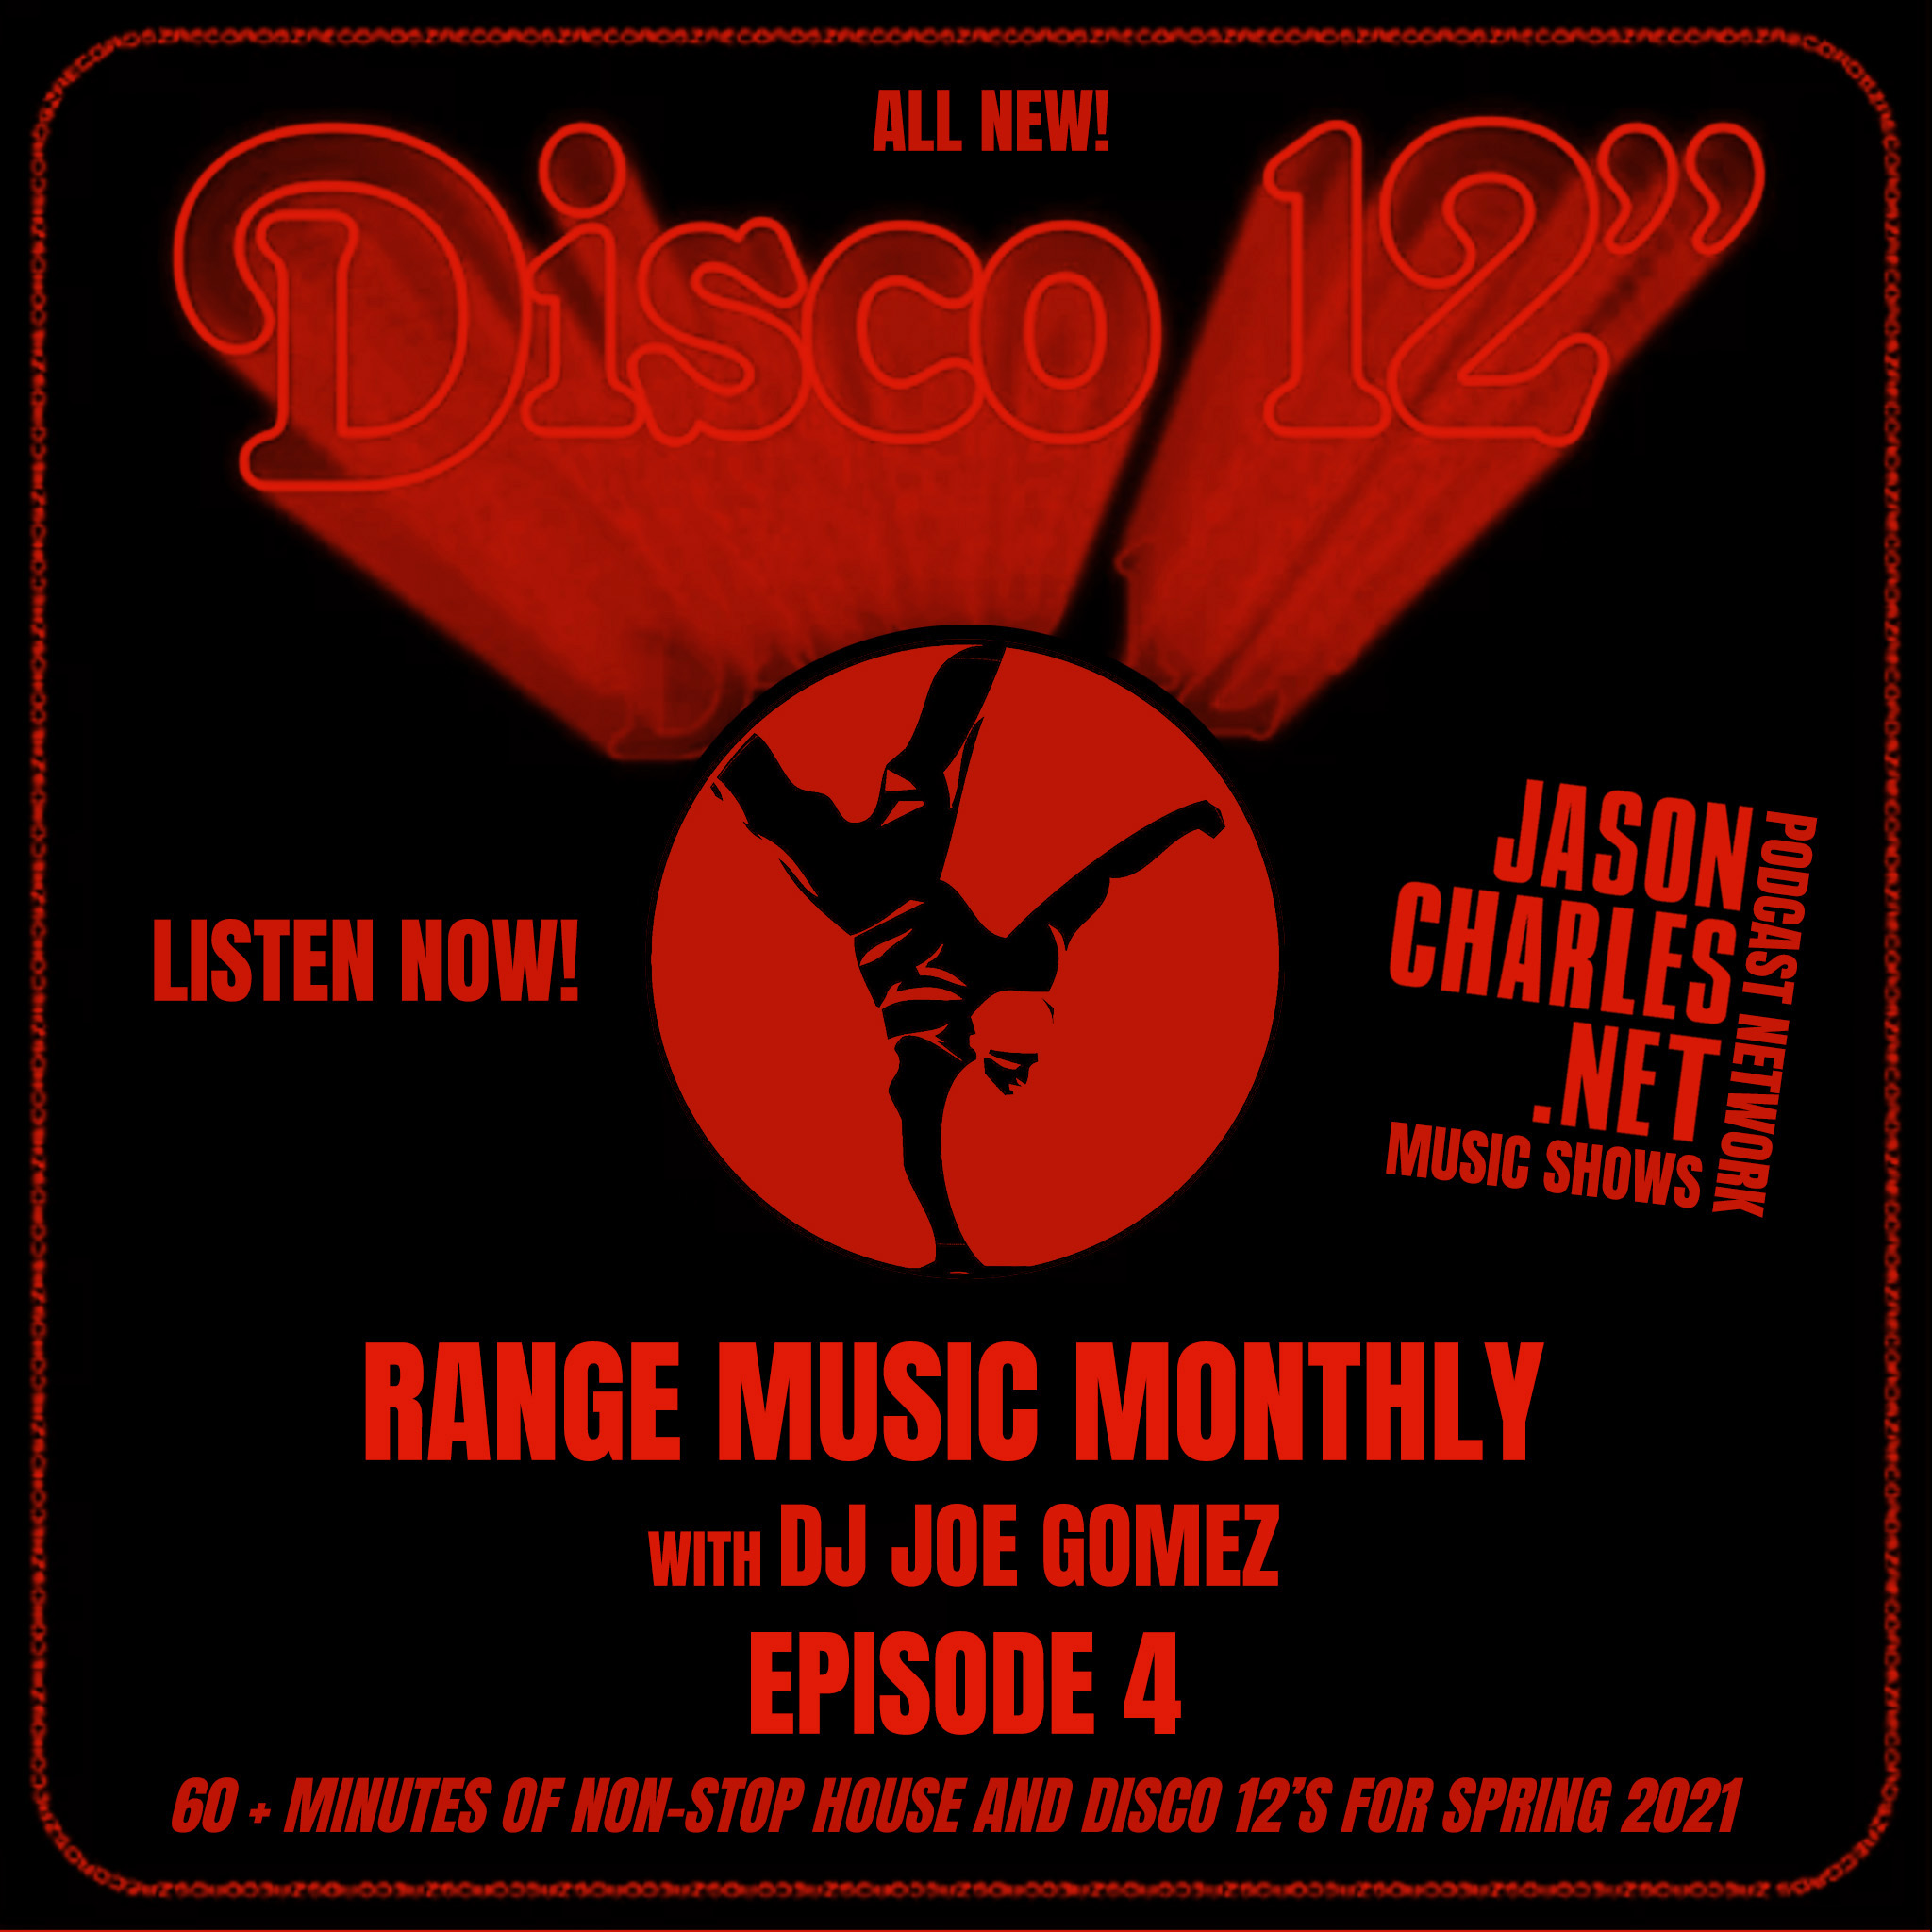 RANGE MUSIC MONTHLY with DJ Joe Gomez Episode 4 Spring 2021 House & Disco 12's